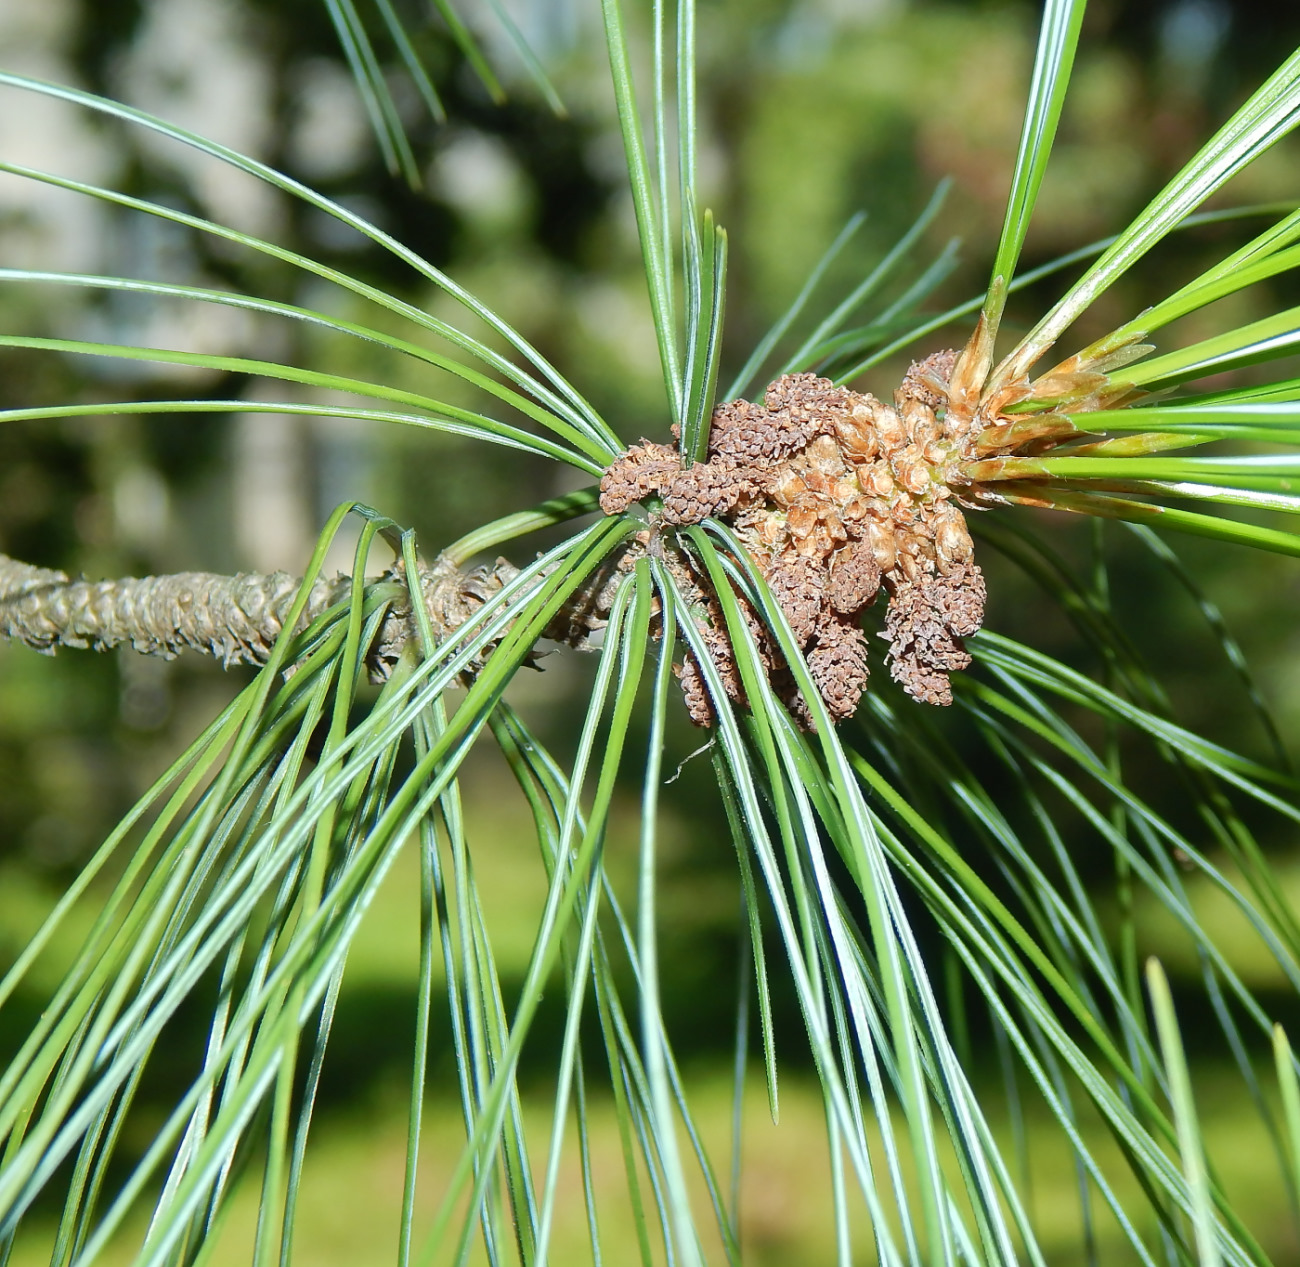 Image of genus Pinus individual.